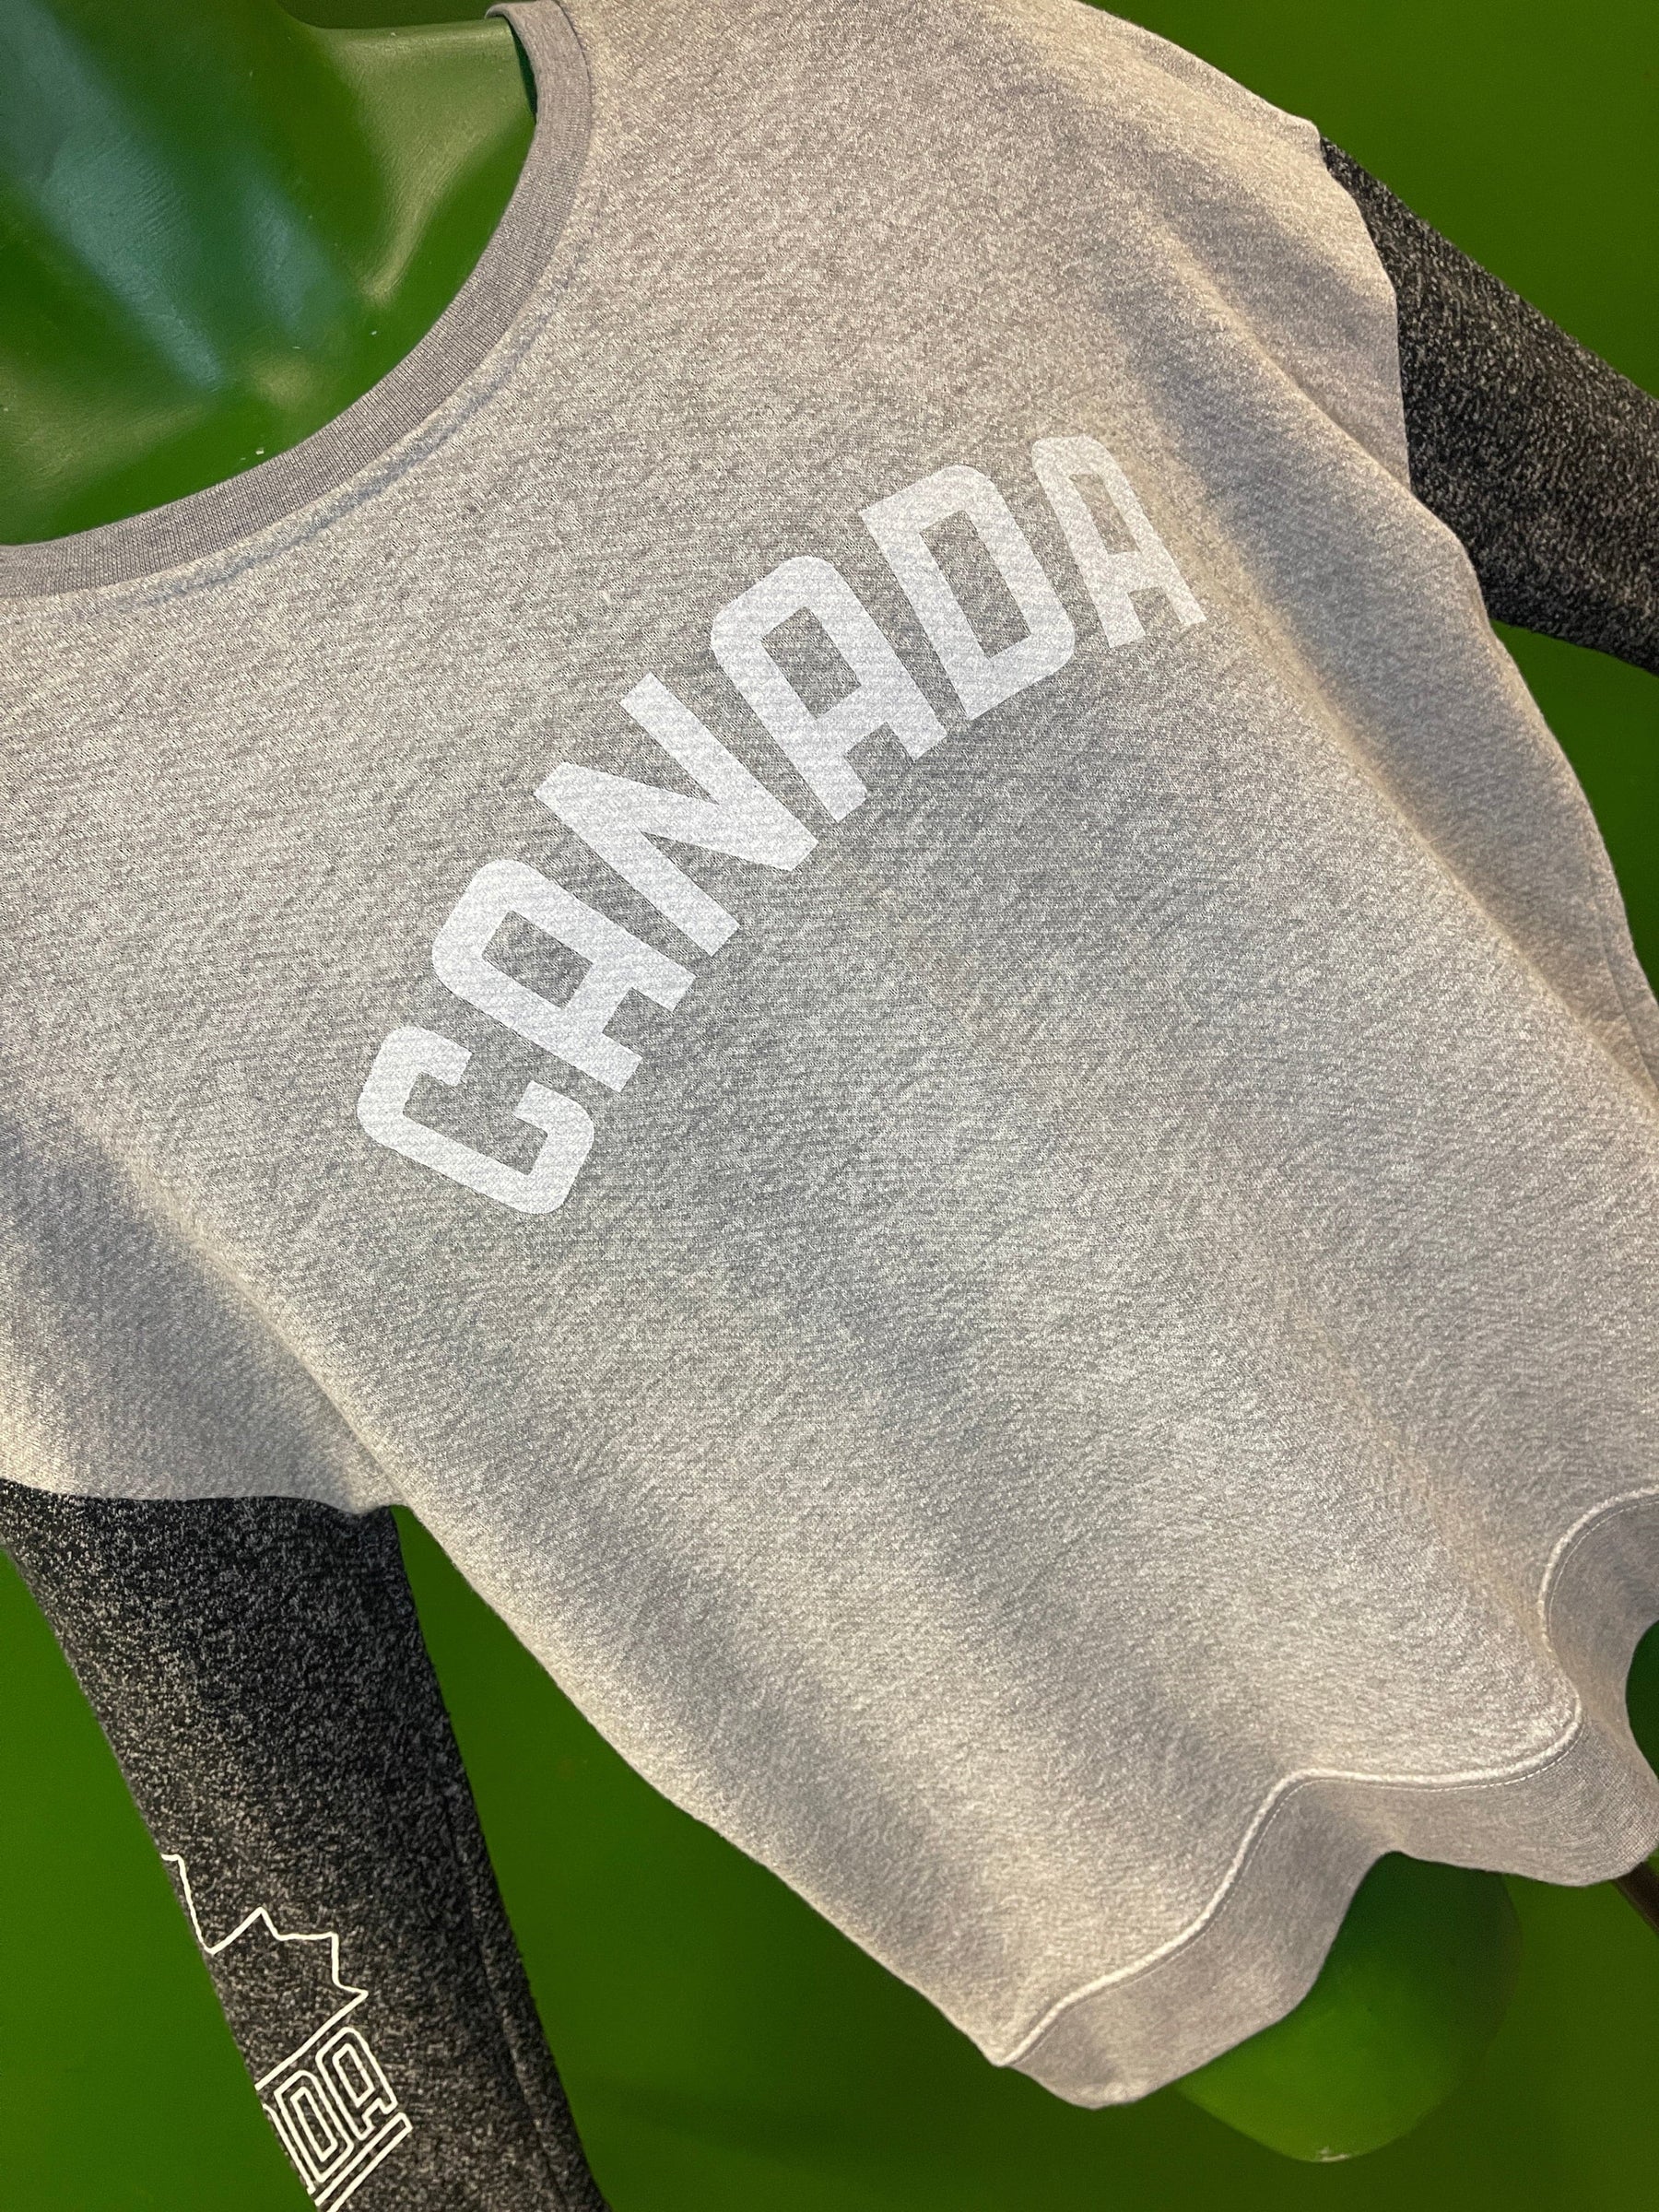 Olympics Team Canada Heathered Grey Pullover Sweatshirt Women's Medium